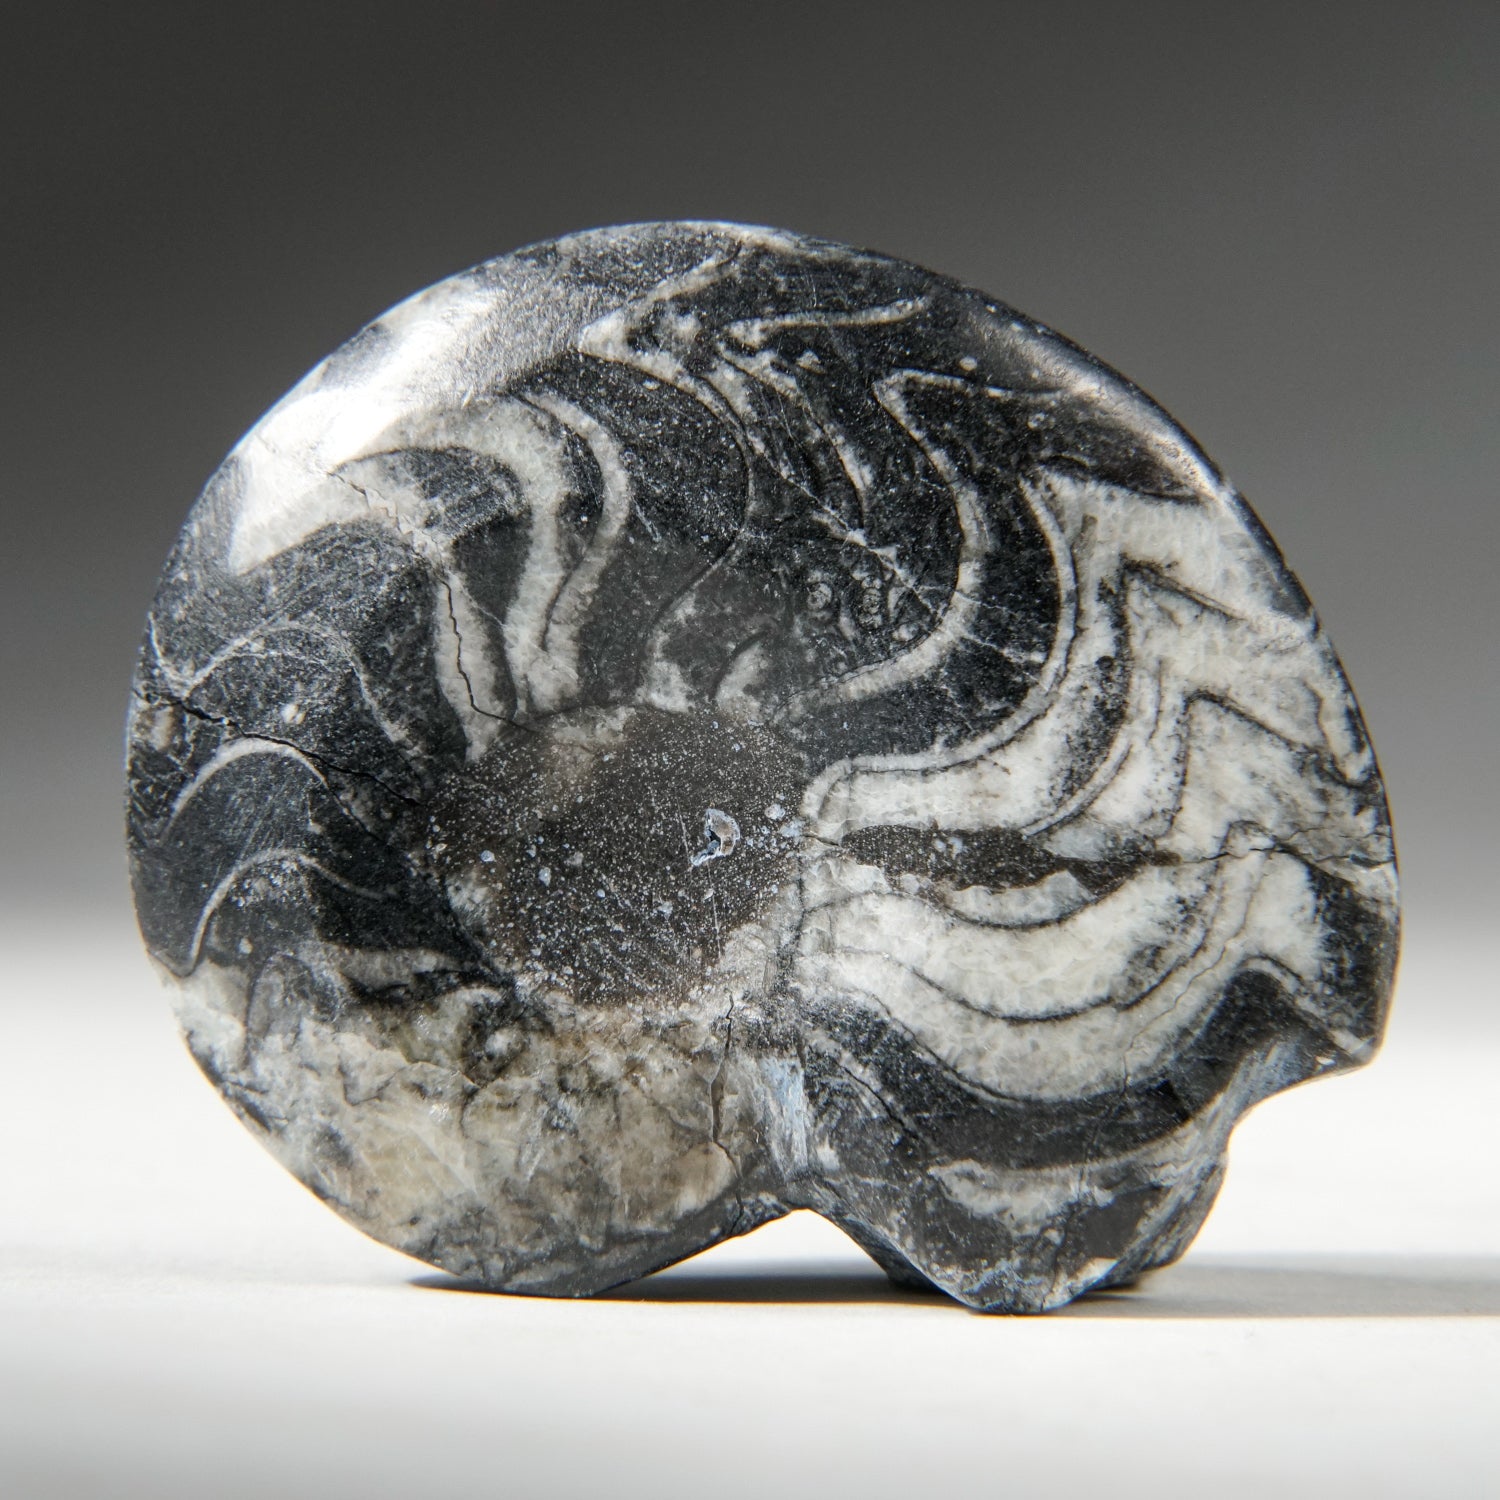 Genuine Polished Goniatite Ammonite Fossil - Small (27.4 grams)